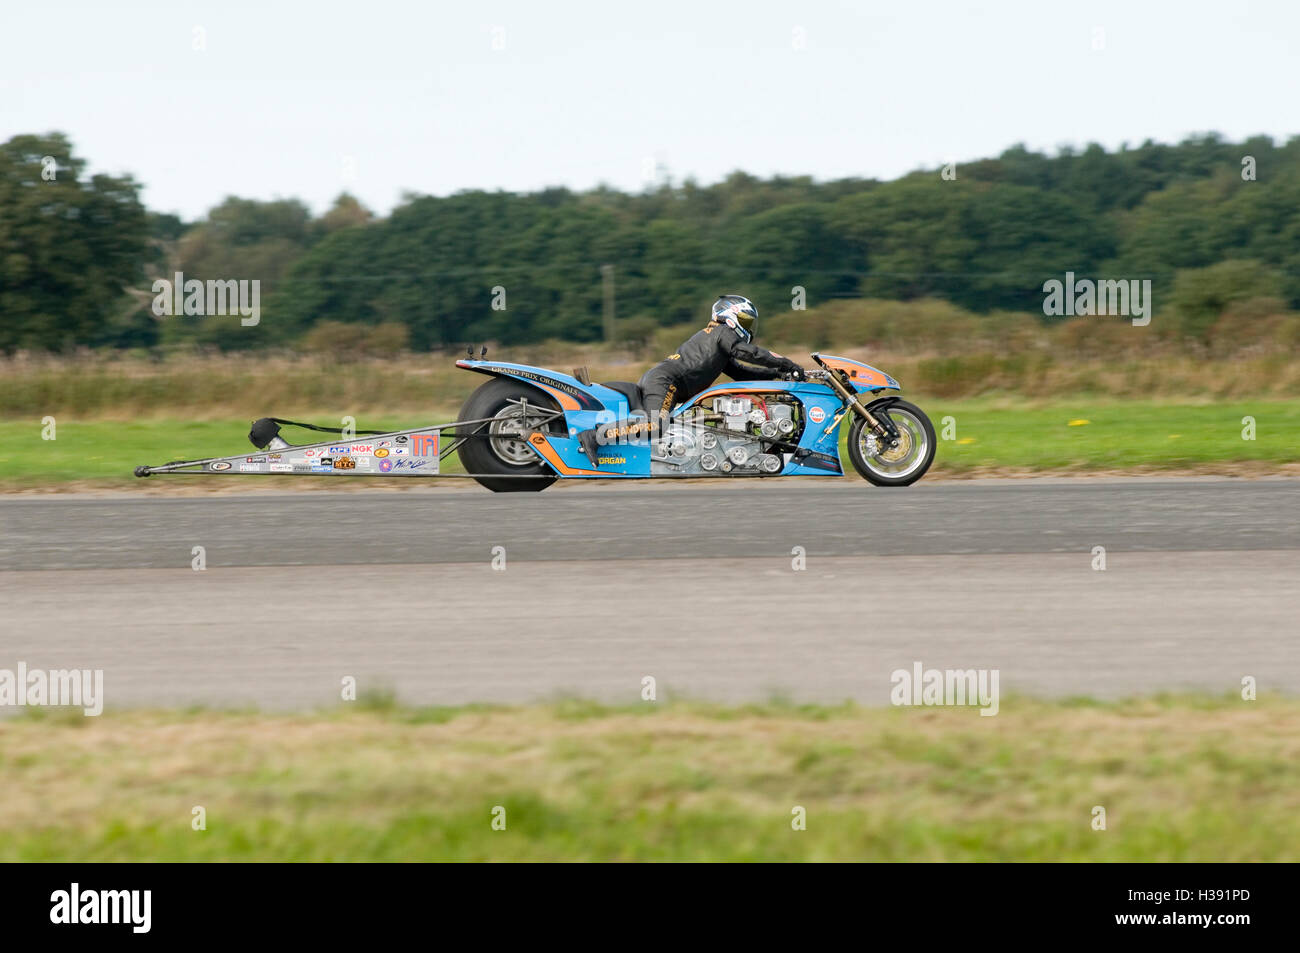 Ian King 10 Mal europäische Top-Fuel-Motorrad Drag Racing Champion, auf seine 1500 hp, 15 Fuß langen Bike racing Stockfoto